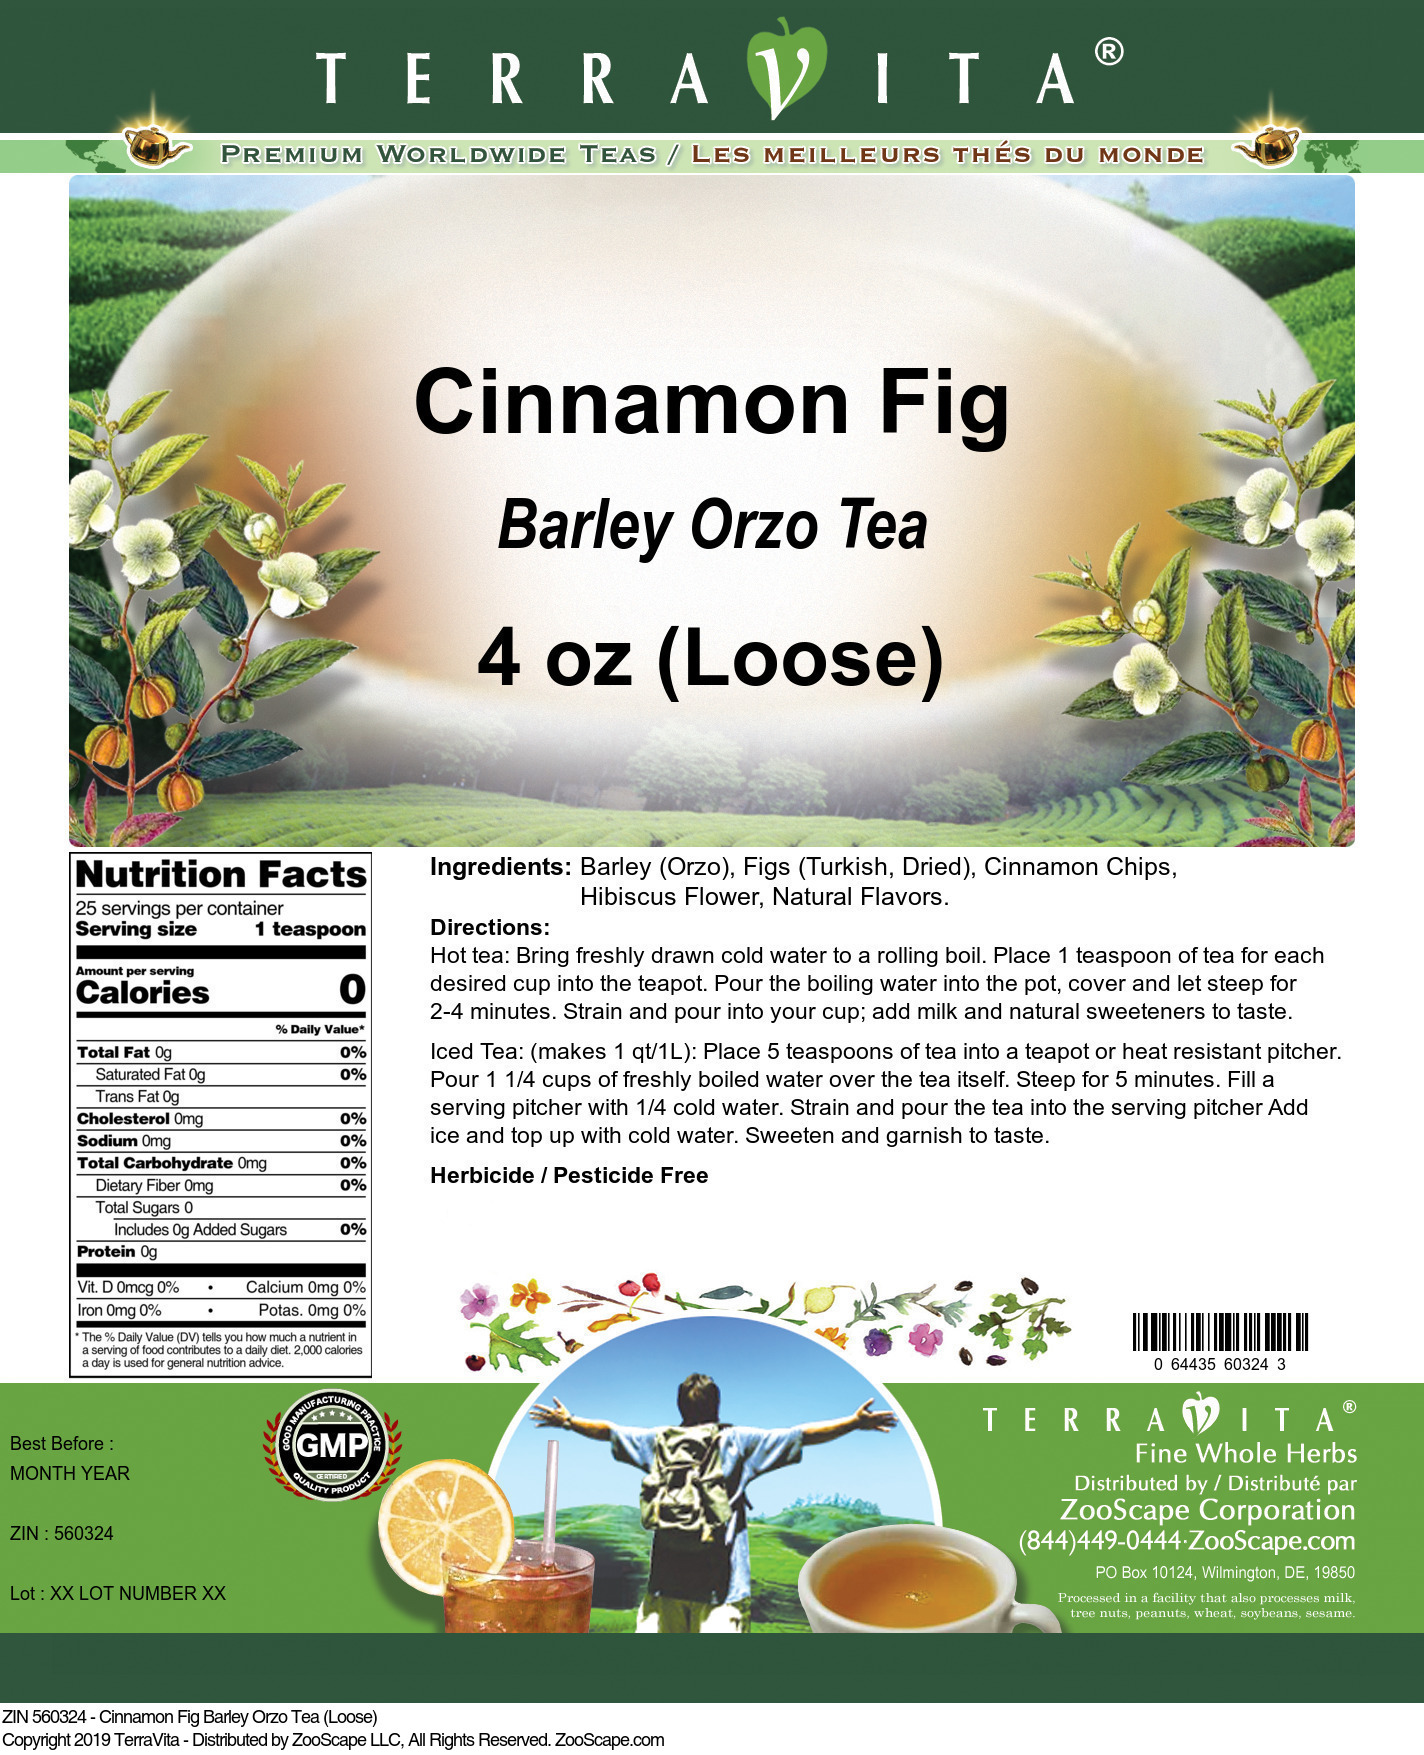 Cinnamon Fig Barley Orzo Tea (Loose) - Label